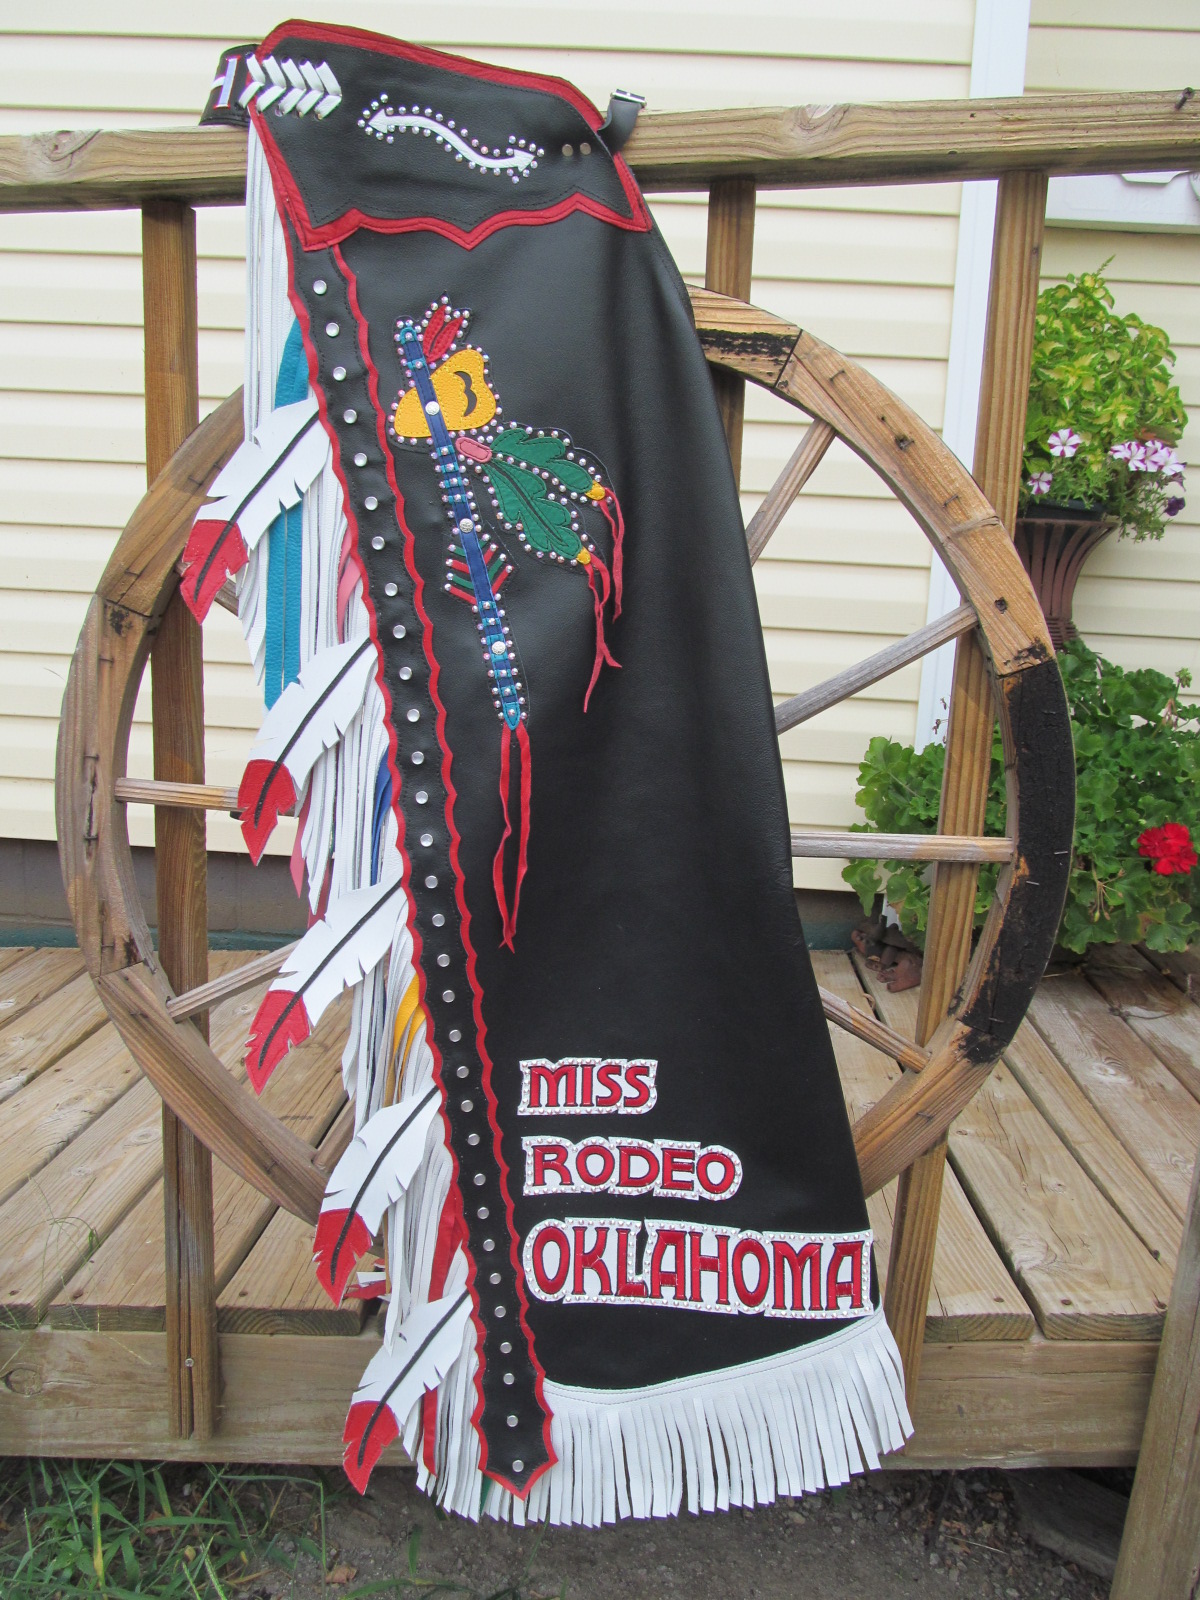 Rodeo Queen Chaps,Miss Rodeo Queen Oklahoma Chaps 2014